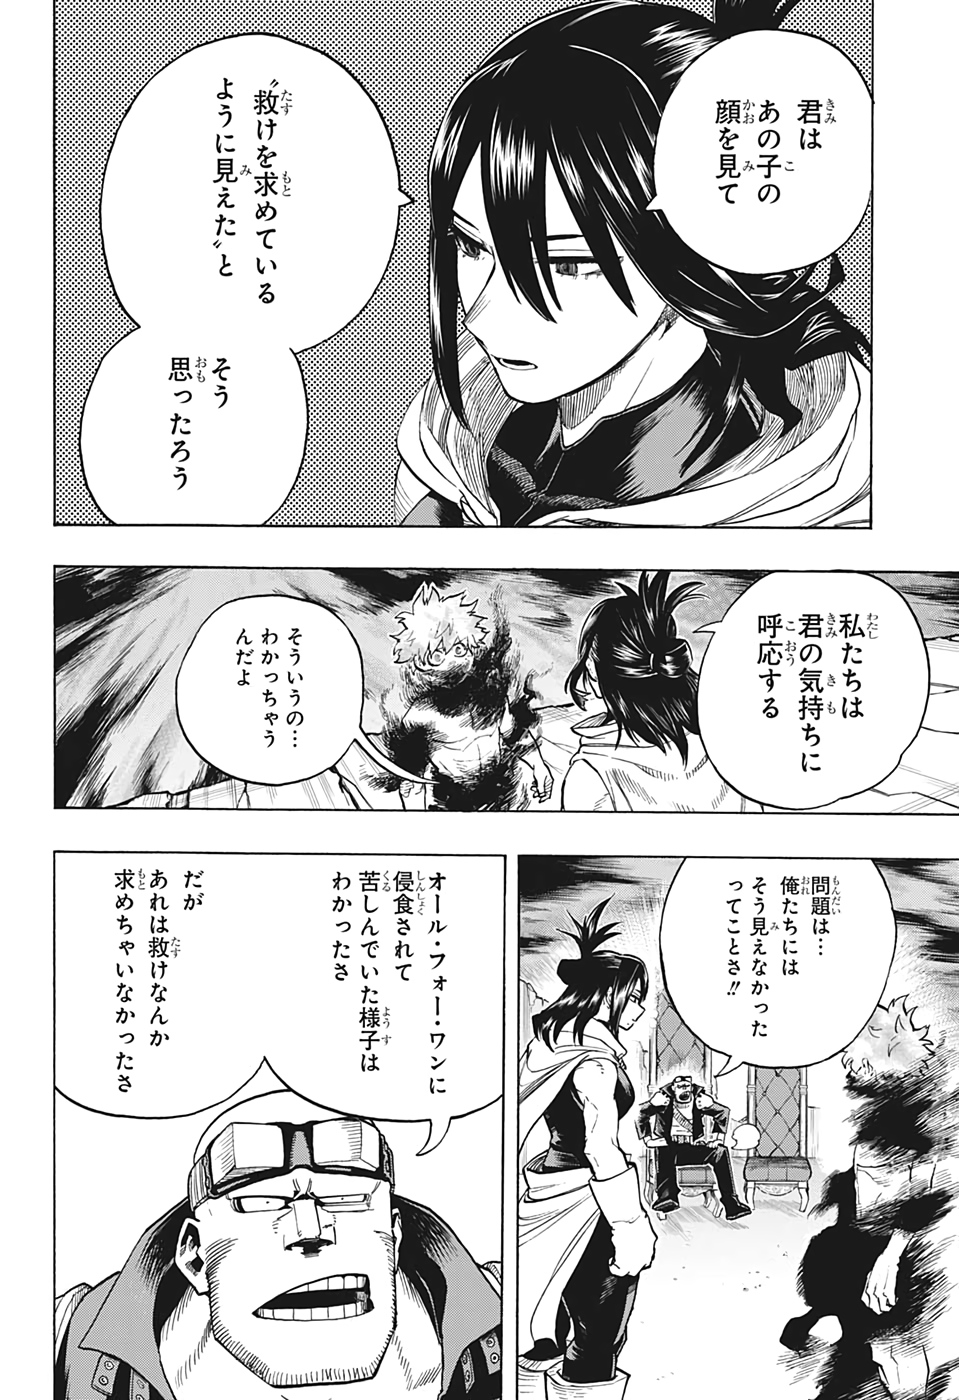 Boku no Hero Academia - Chapter 305 - Page 2